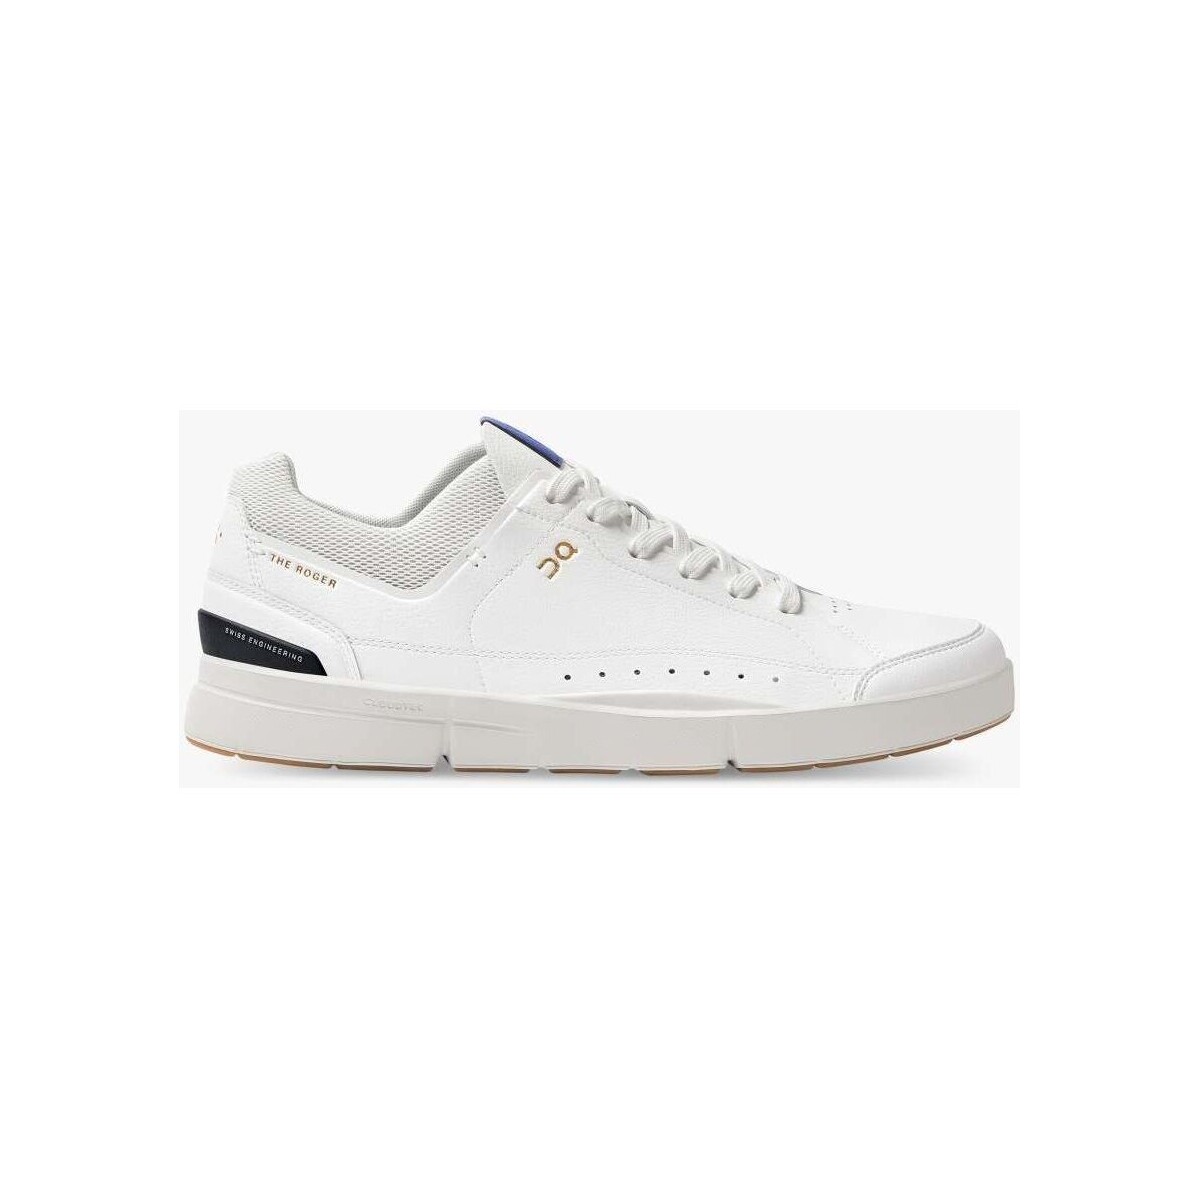 Schuhe Herren Sneaker On Running THE ROGER CENTRE COURT-99157 WHITE/INDIGO Weiss